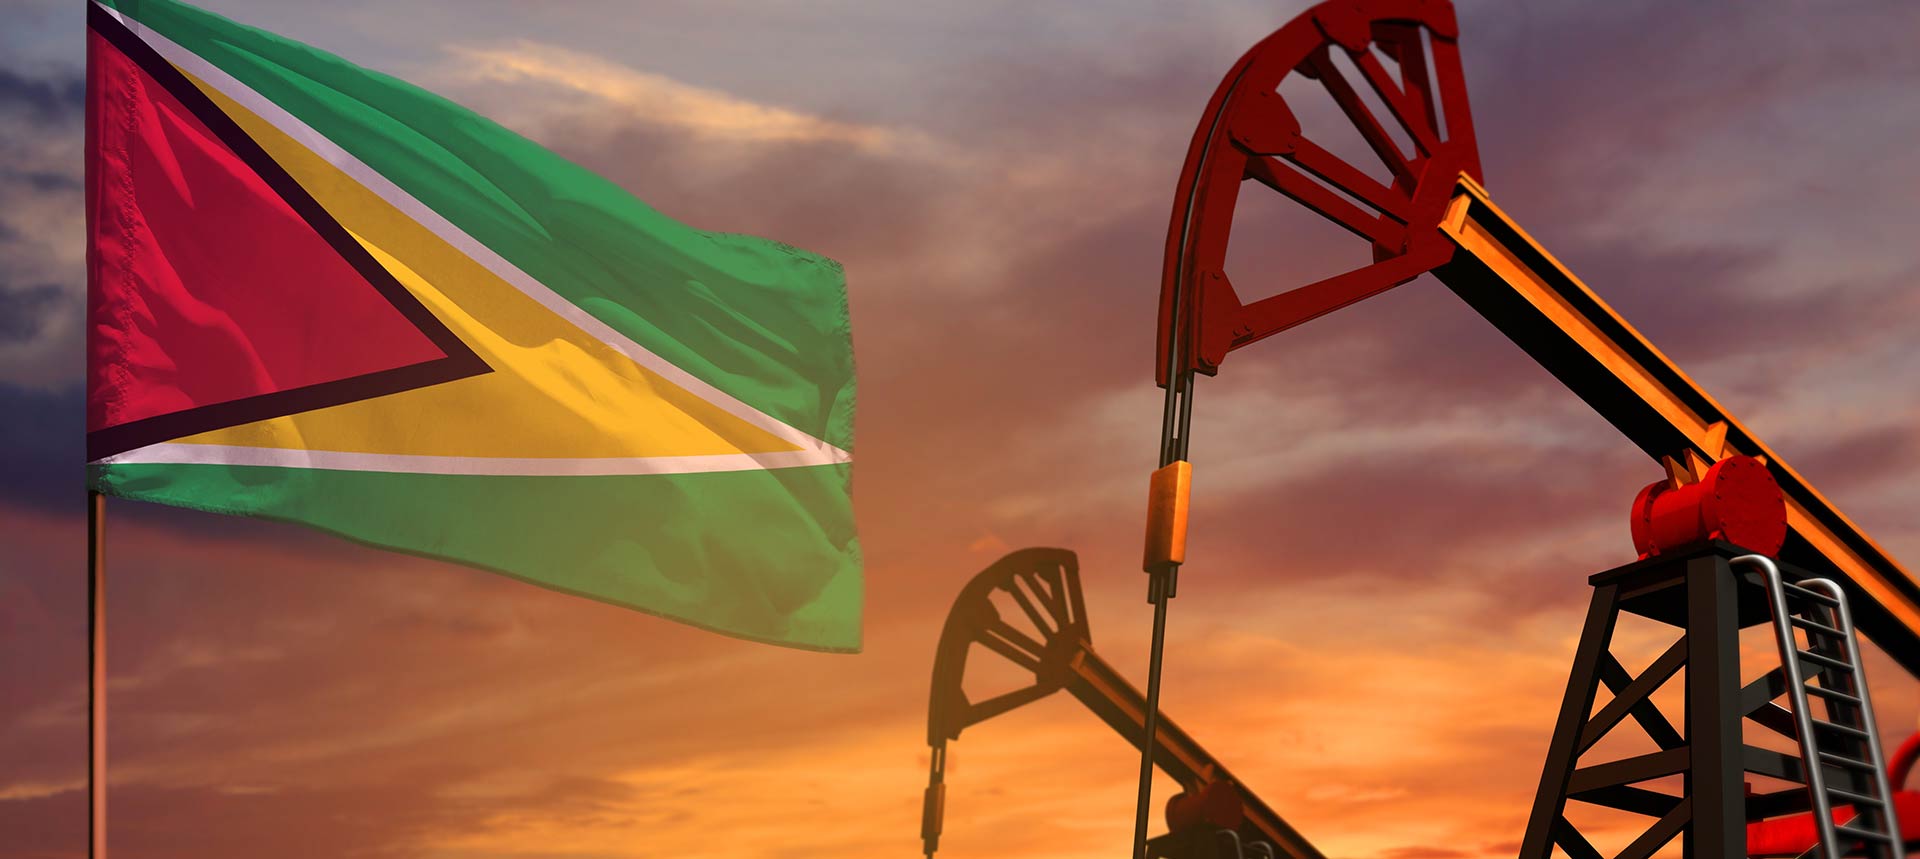 Guyana news, Guyana oil deposits, Guyana oil industry, Guyana oil discovery, China news, Chinese investment in Guyana, Exxon news, Exxon Guyana, Guyana election news, David Granger Guyana